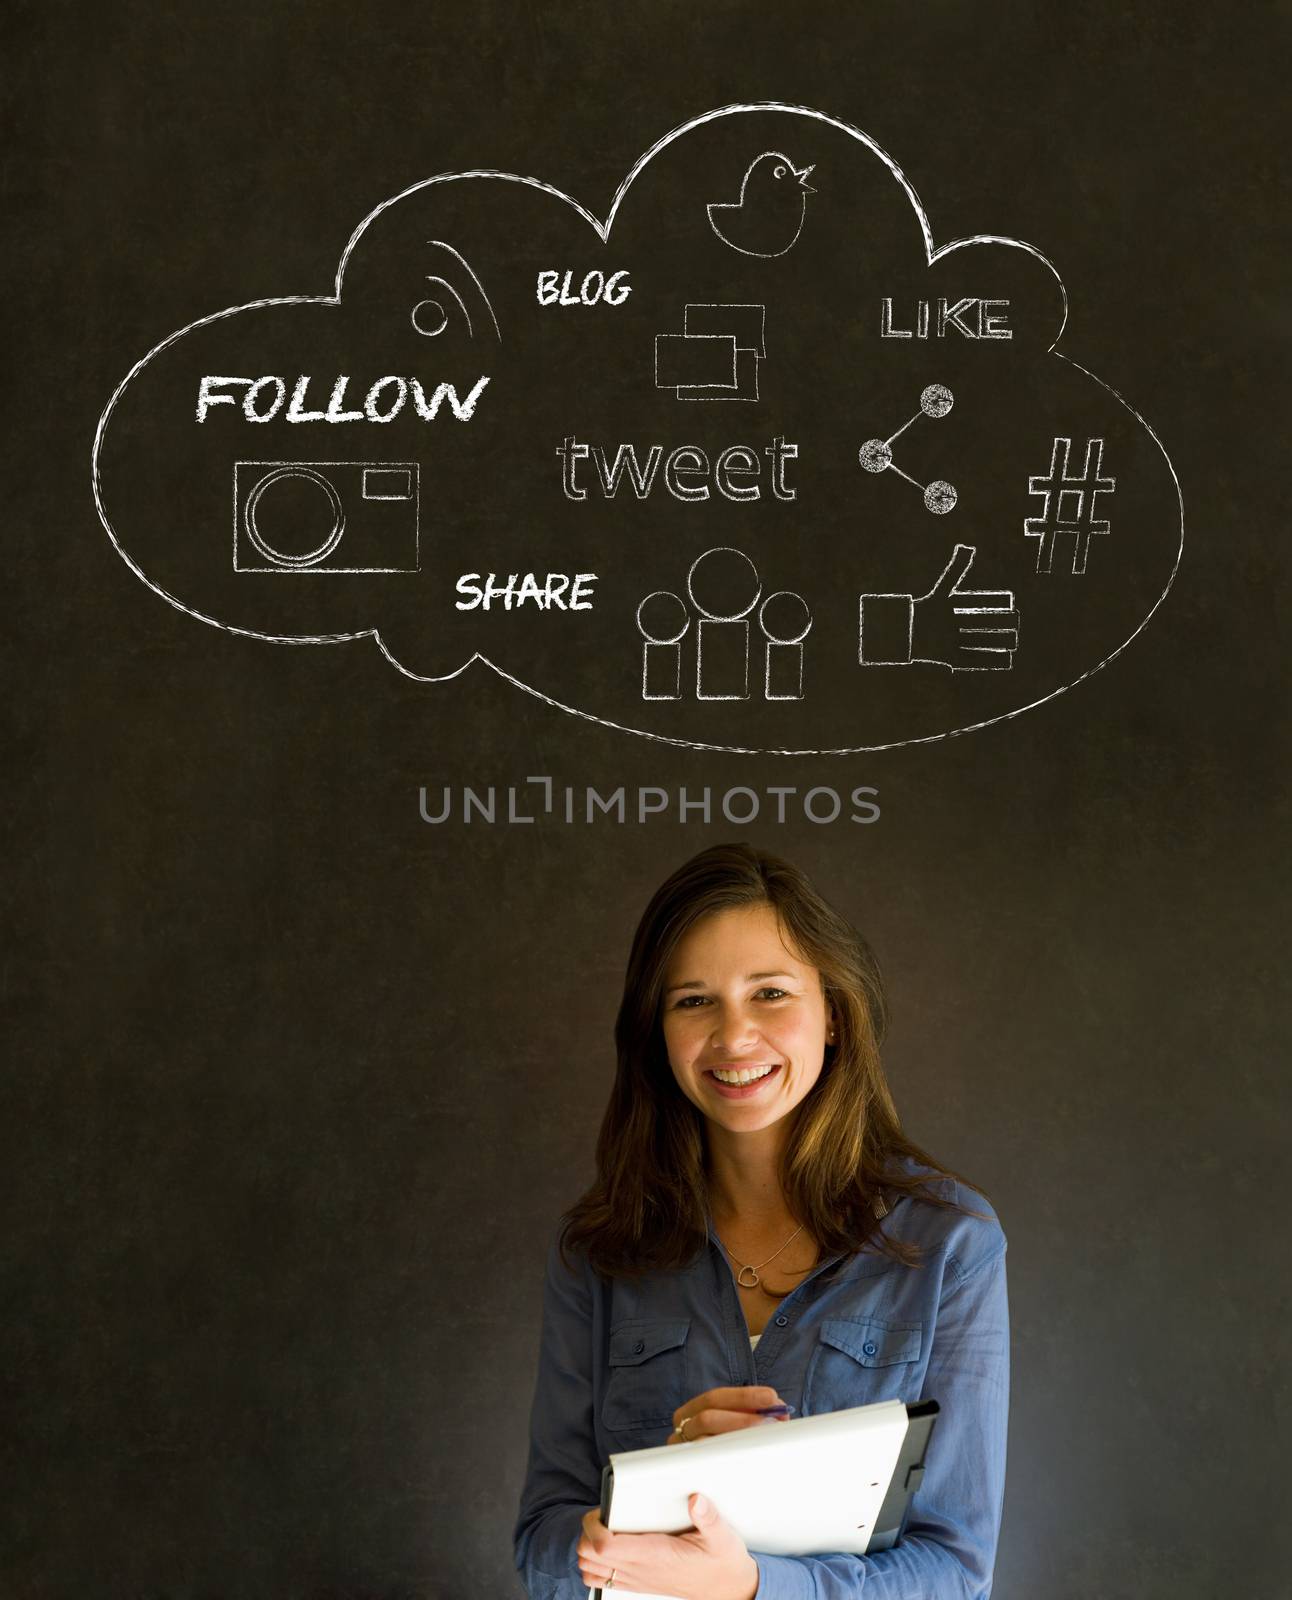 Businesswoman, student or teacher social media chalk concept blackboard background